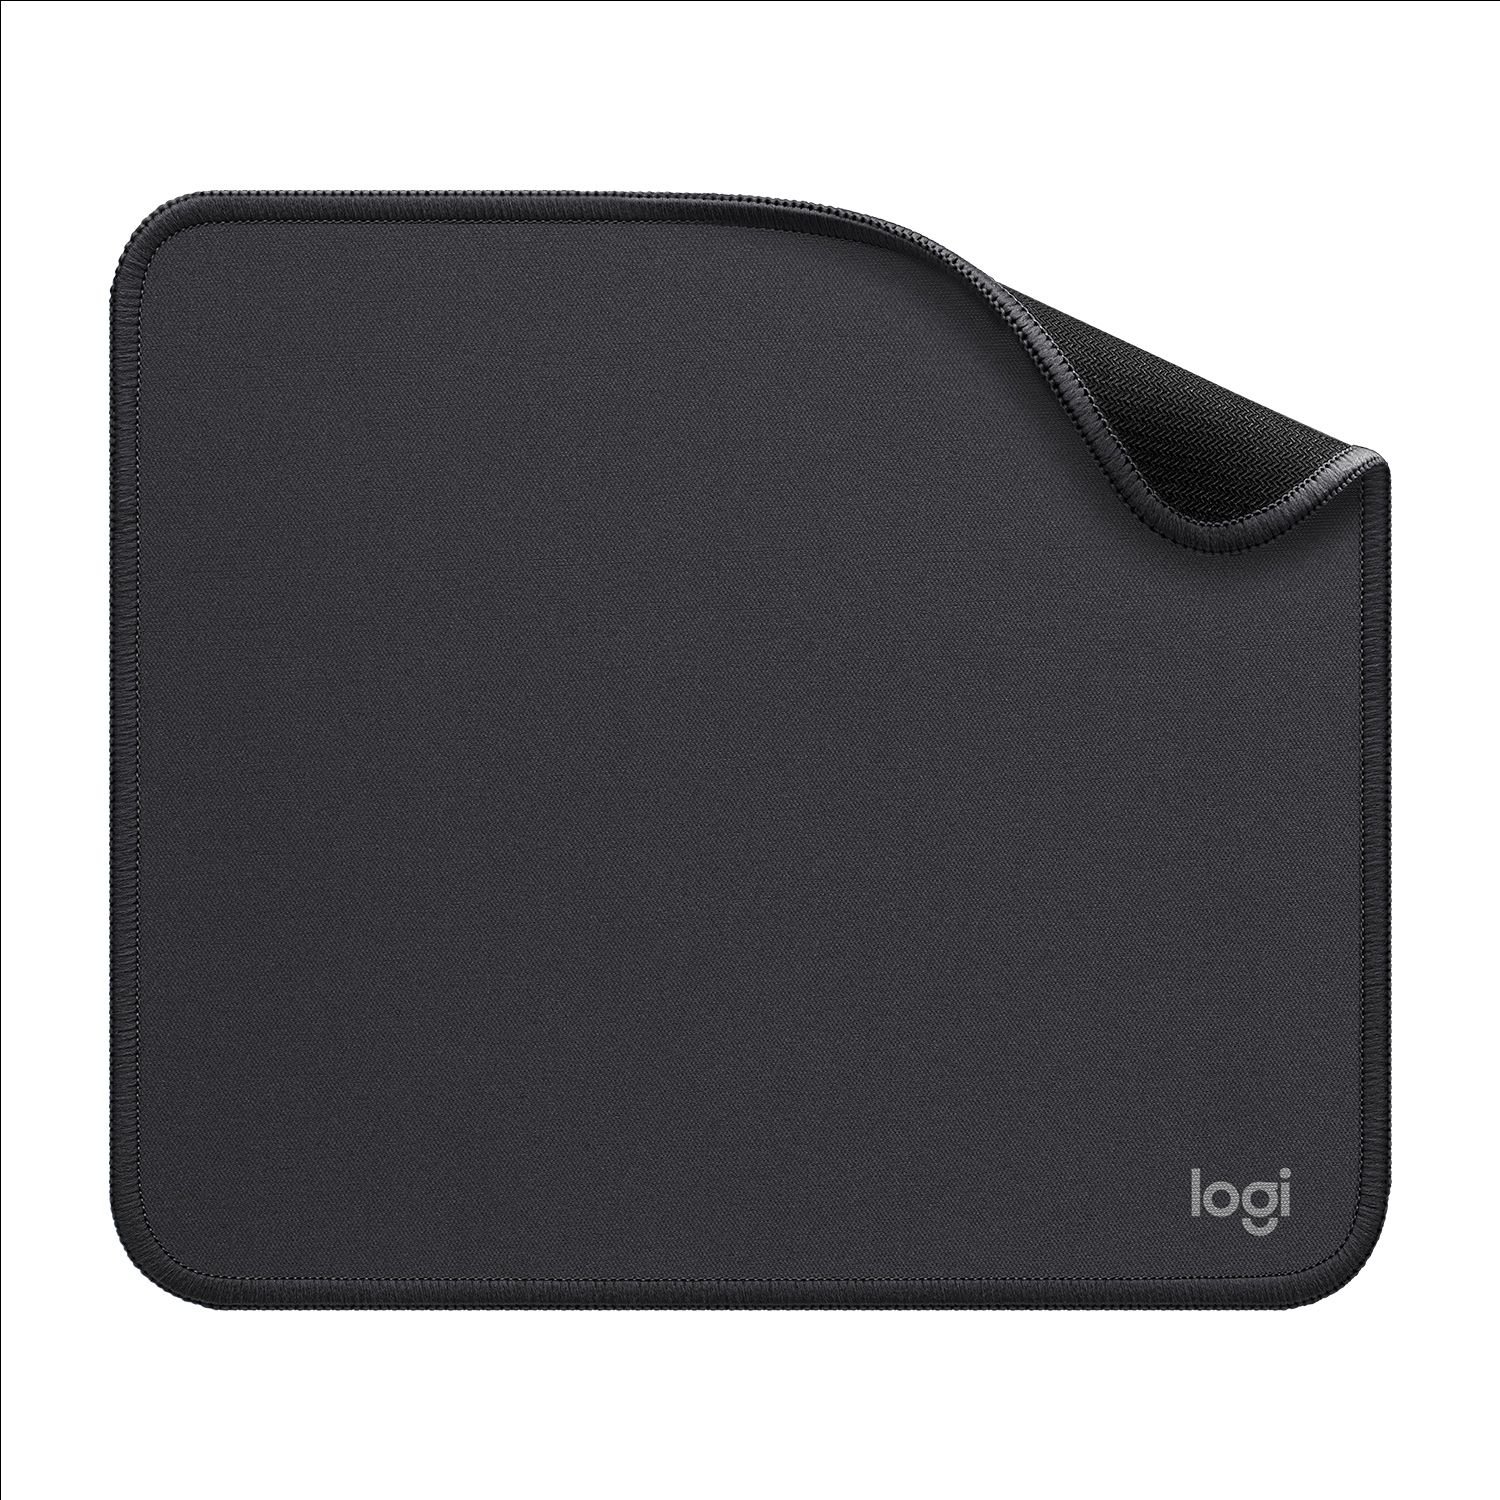 Mousepad Logitech Studio Series - GRAFIT (956-000049)